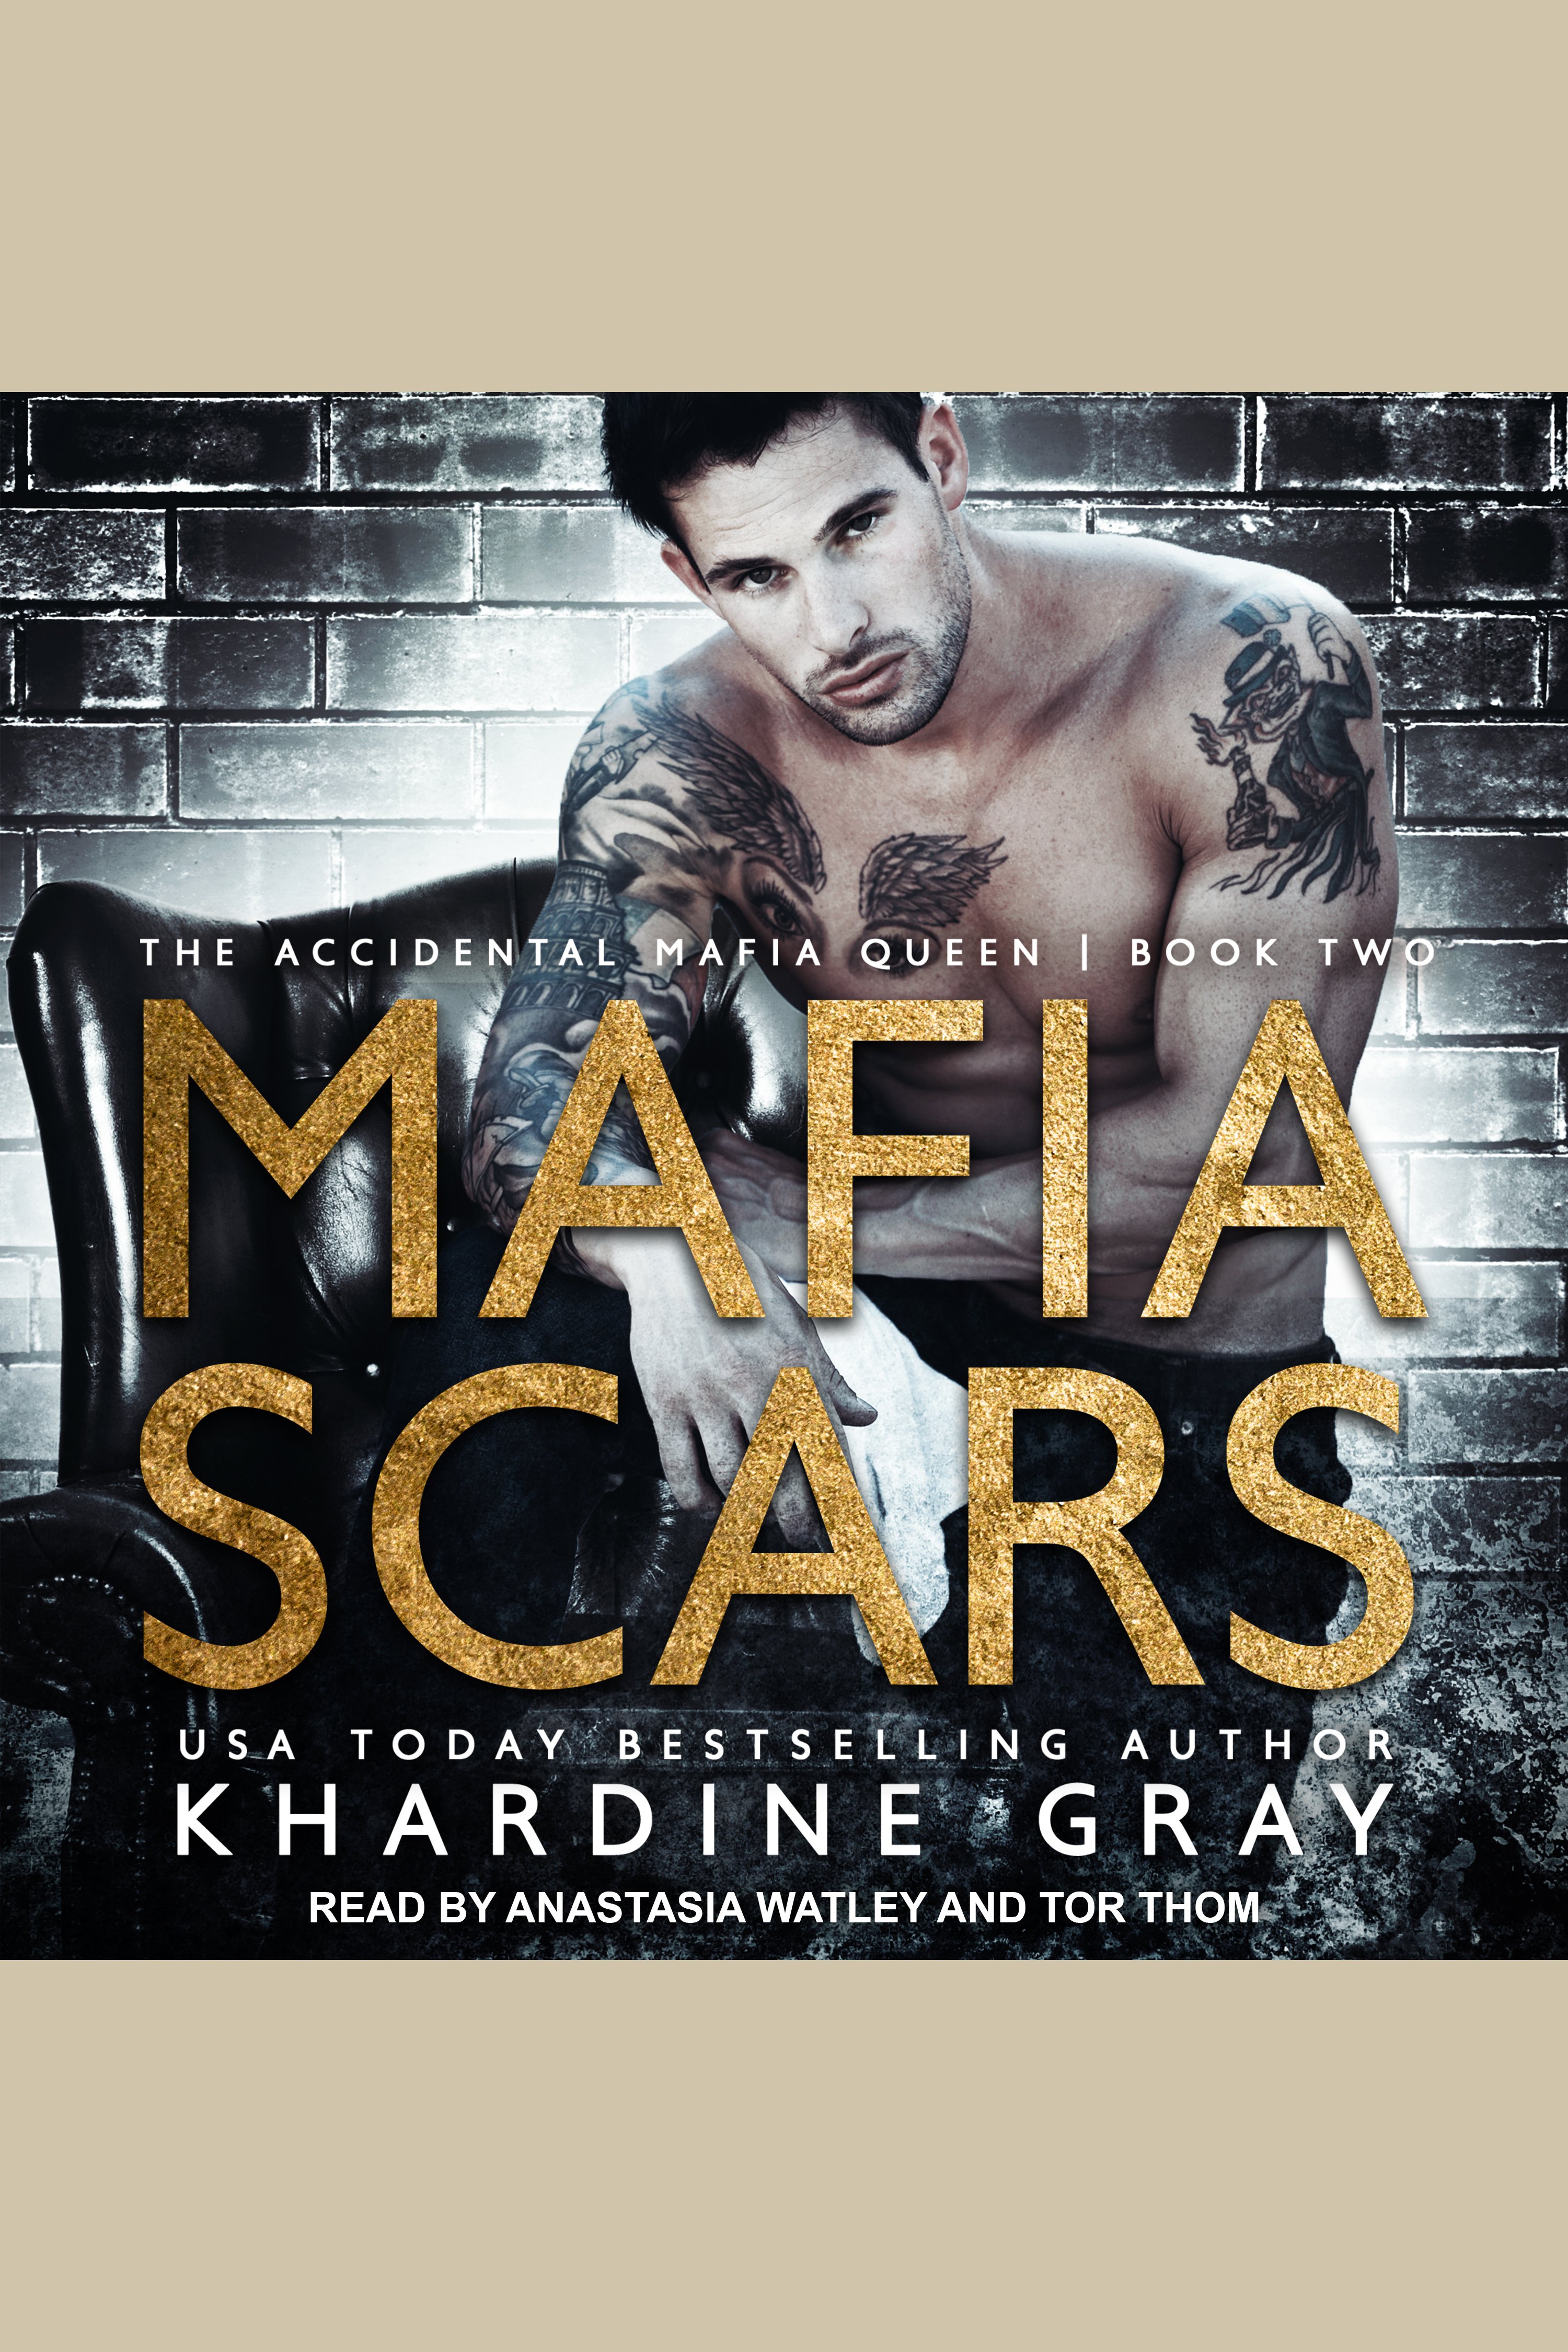 Mafia scars cover image